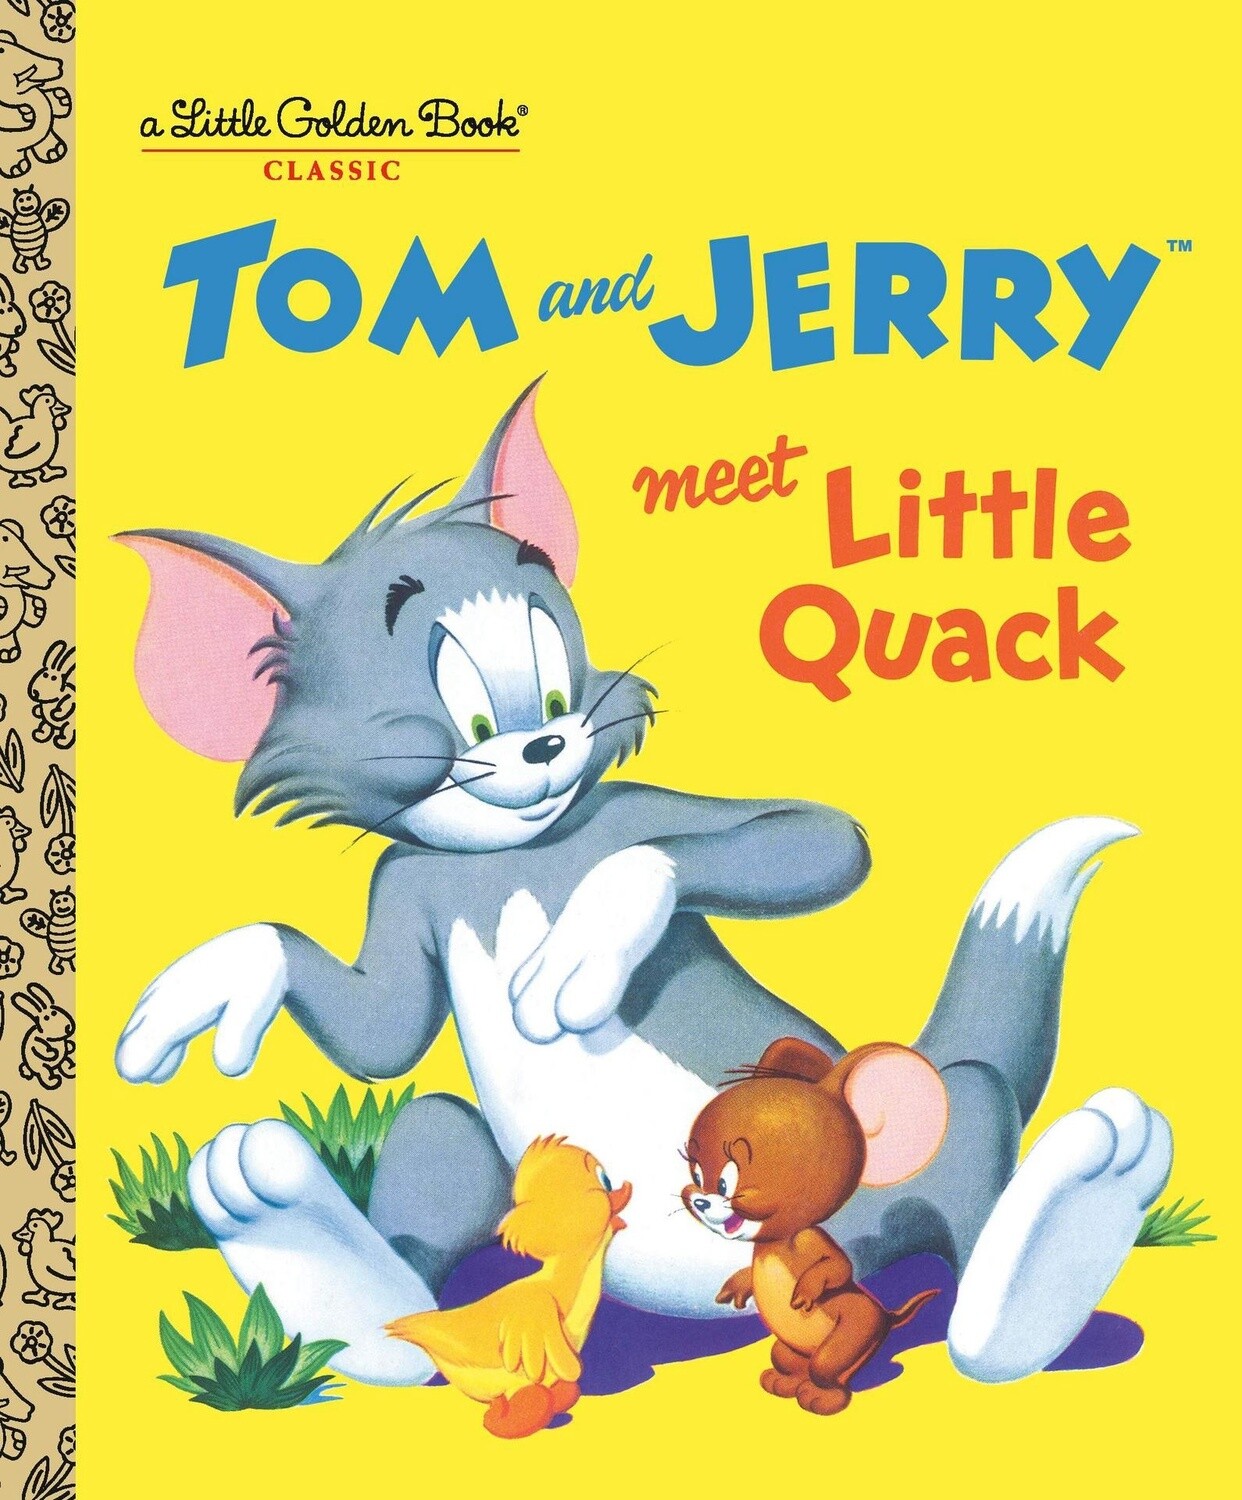 LGB - Tom and Jerry Meet Little Quack (Little Golden Book Classic)